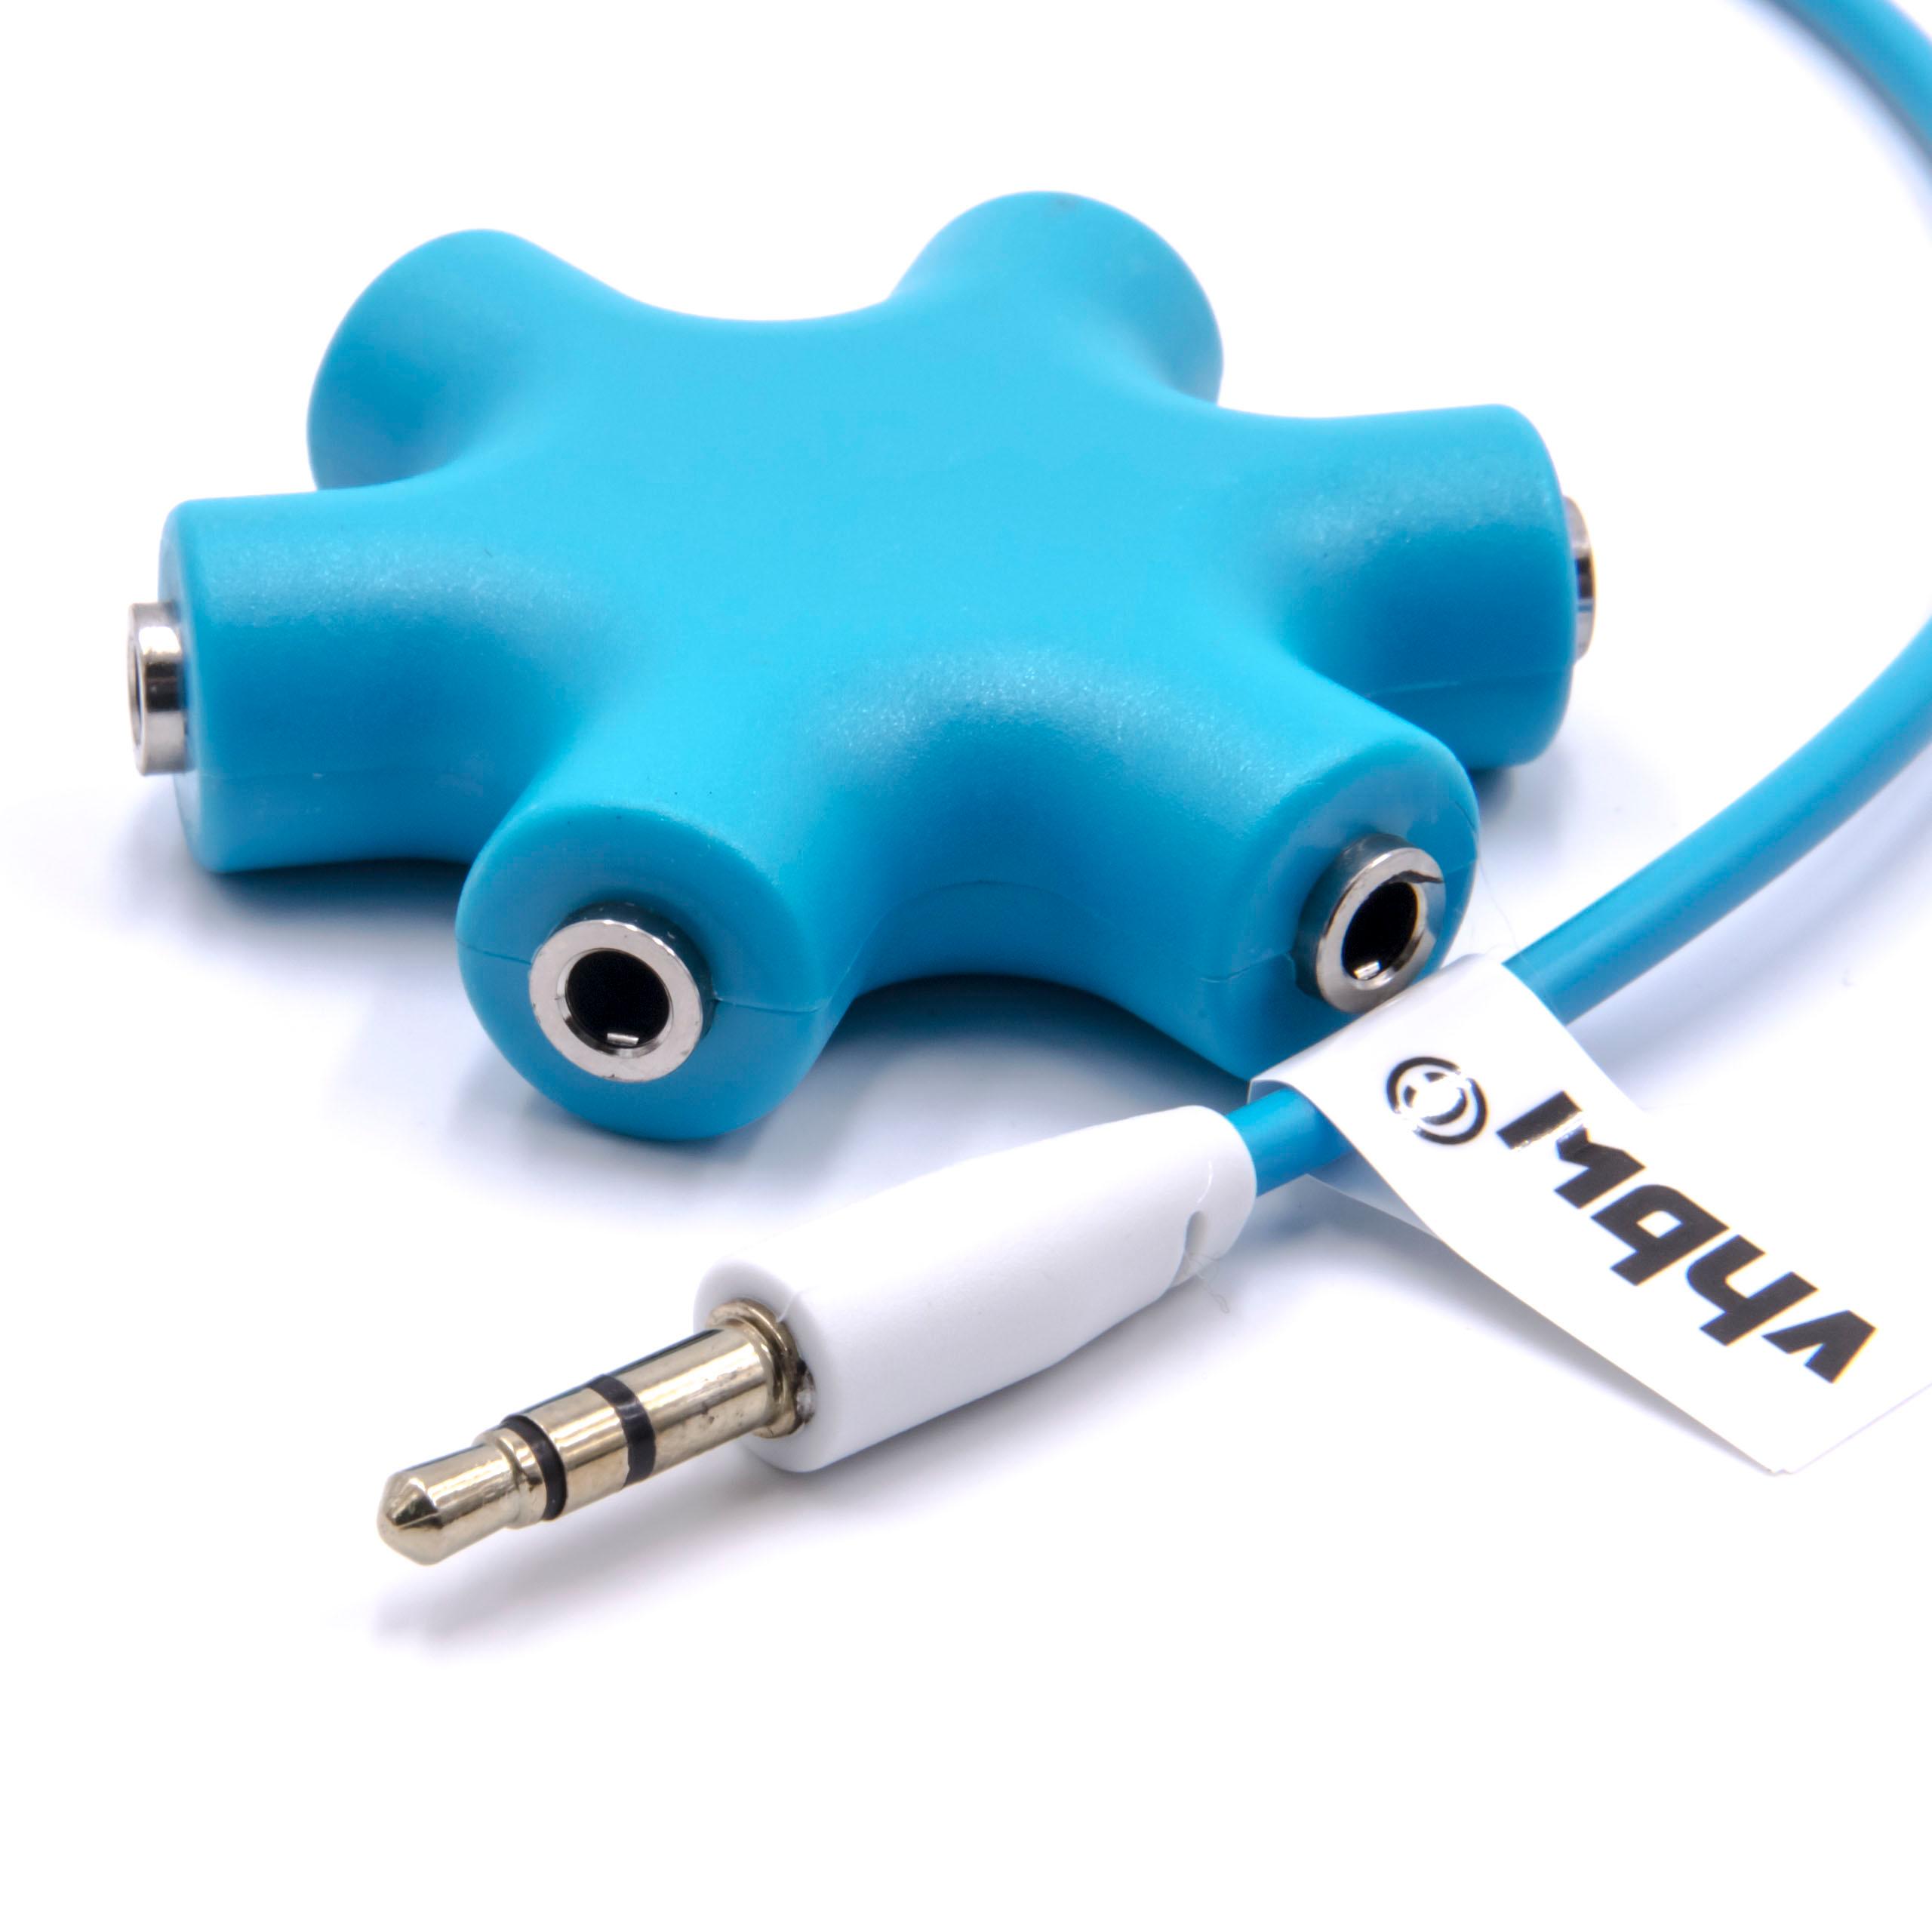 vhbw Multi Audio Splitter 5-Way AUX Headphone Splitter blue for Headphones, Speakers, Devices with 3.5mm Audio